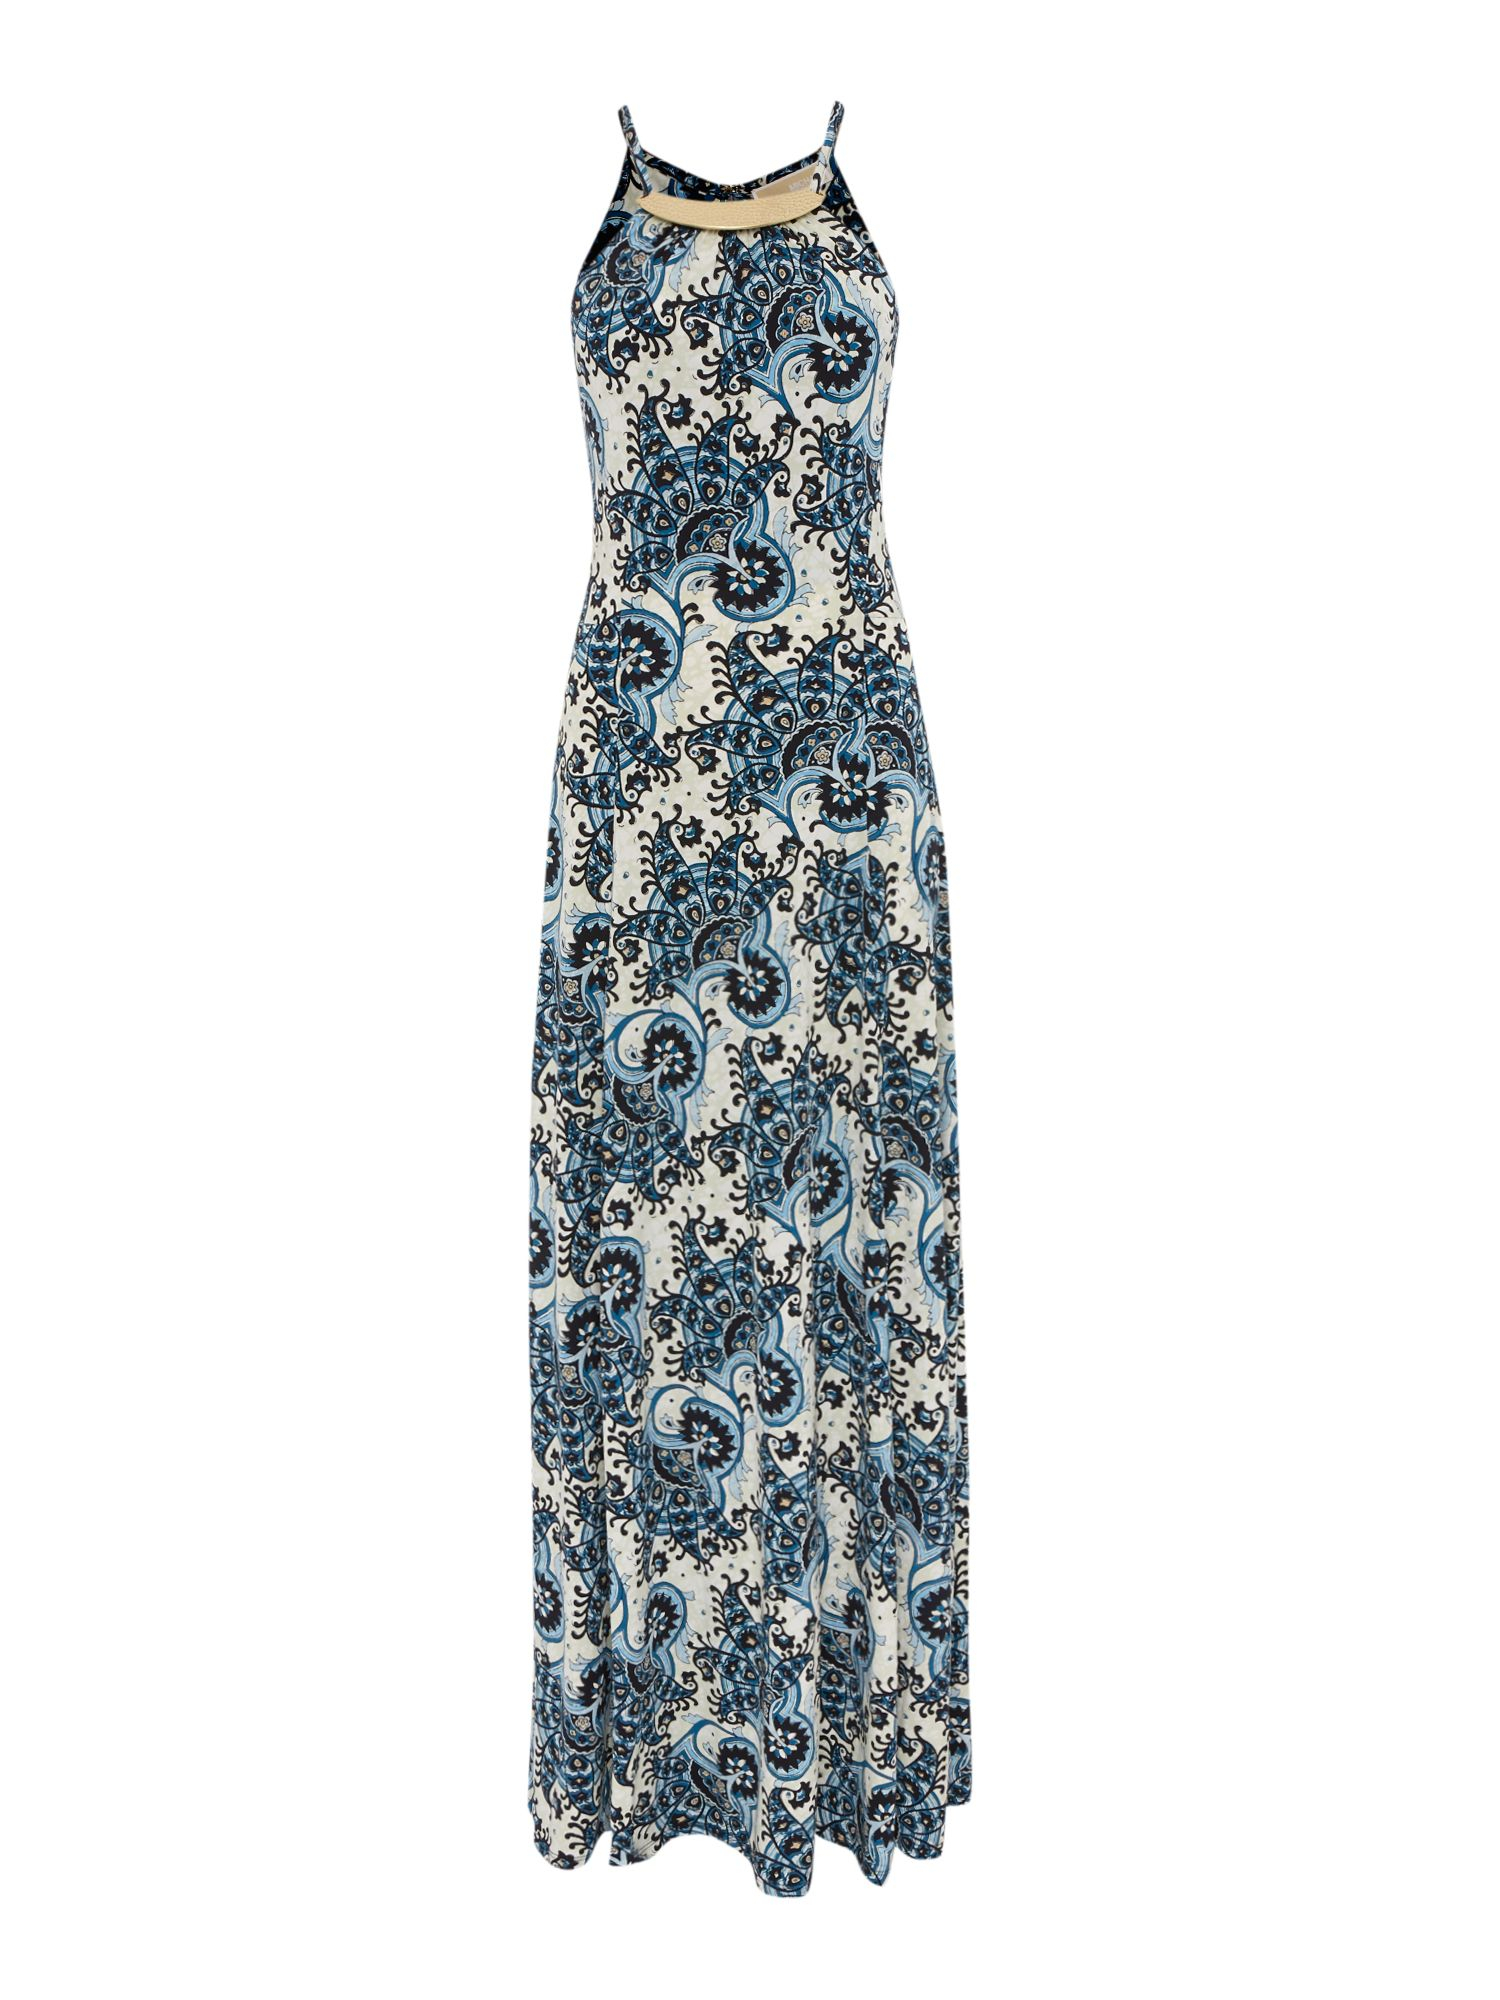 Michael kors Paisley Print Halter Maxi Dress in Blue | Lyst